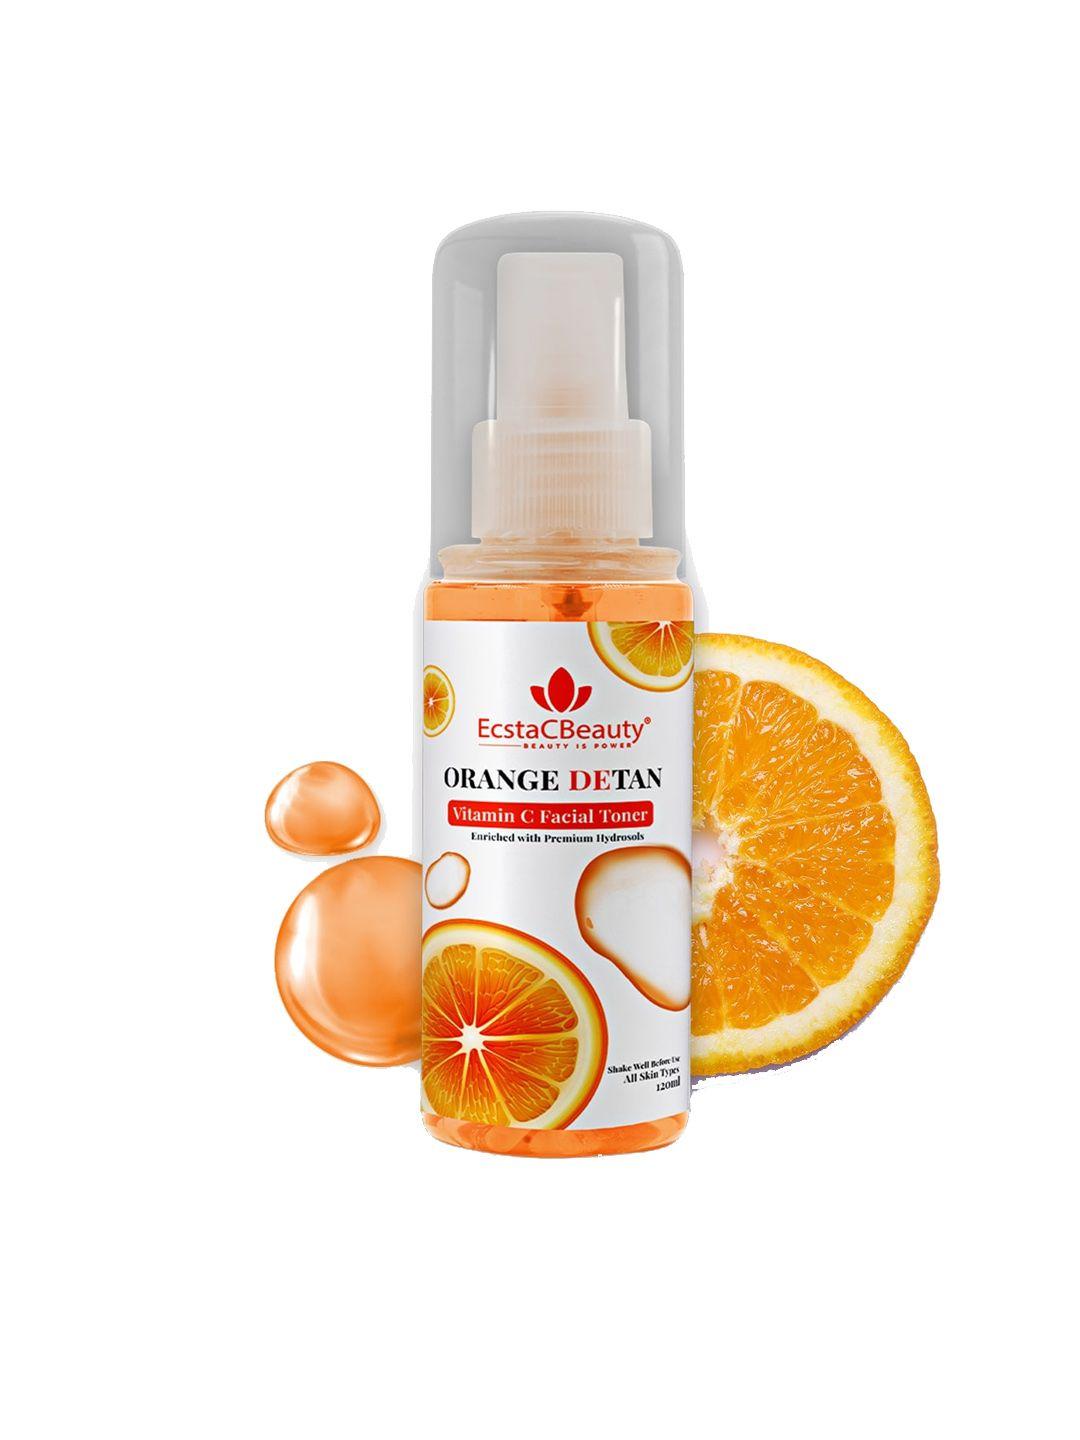 ecstacbeauty orange detan vitamin c facial toner - 120 ml